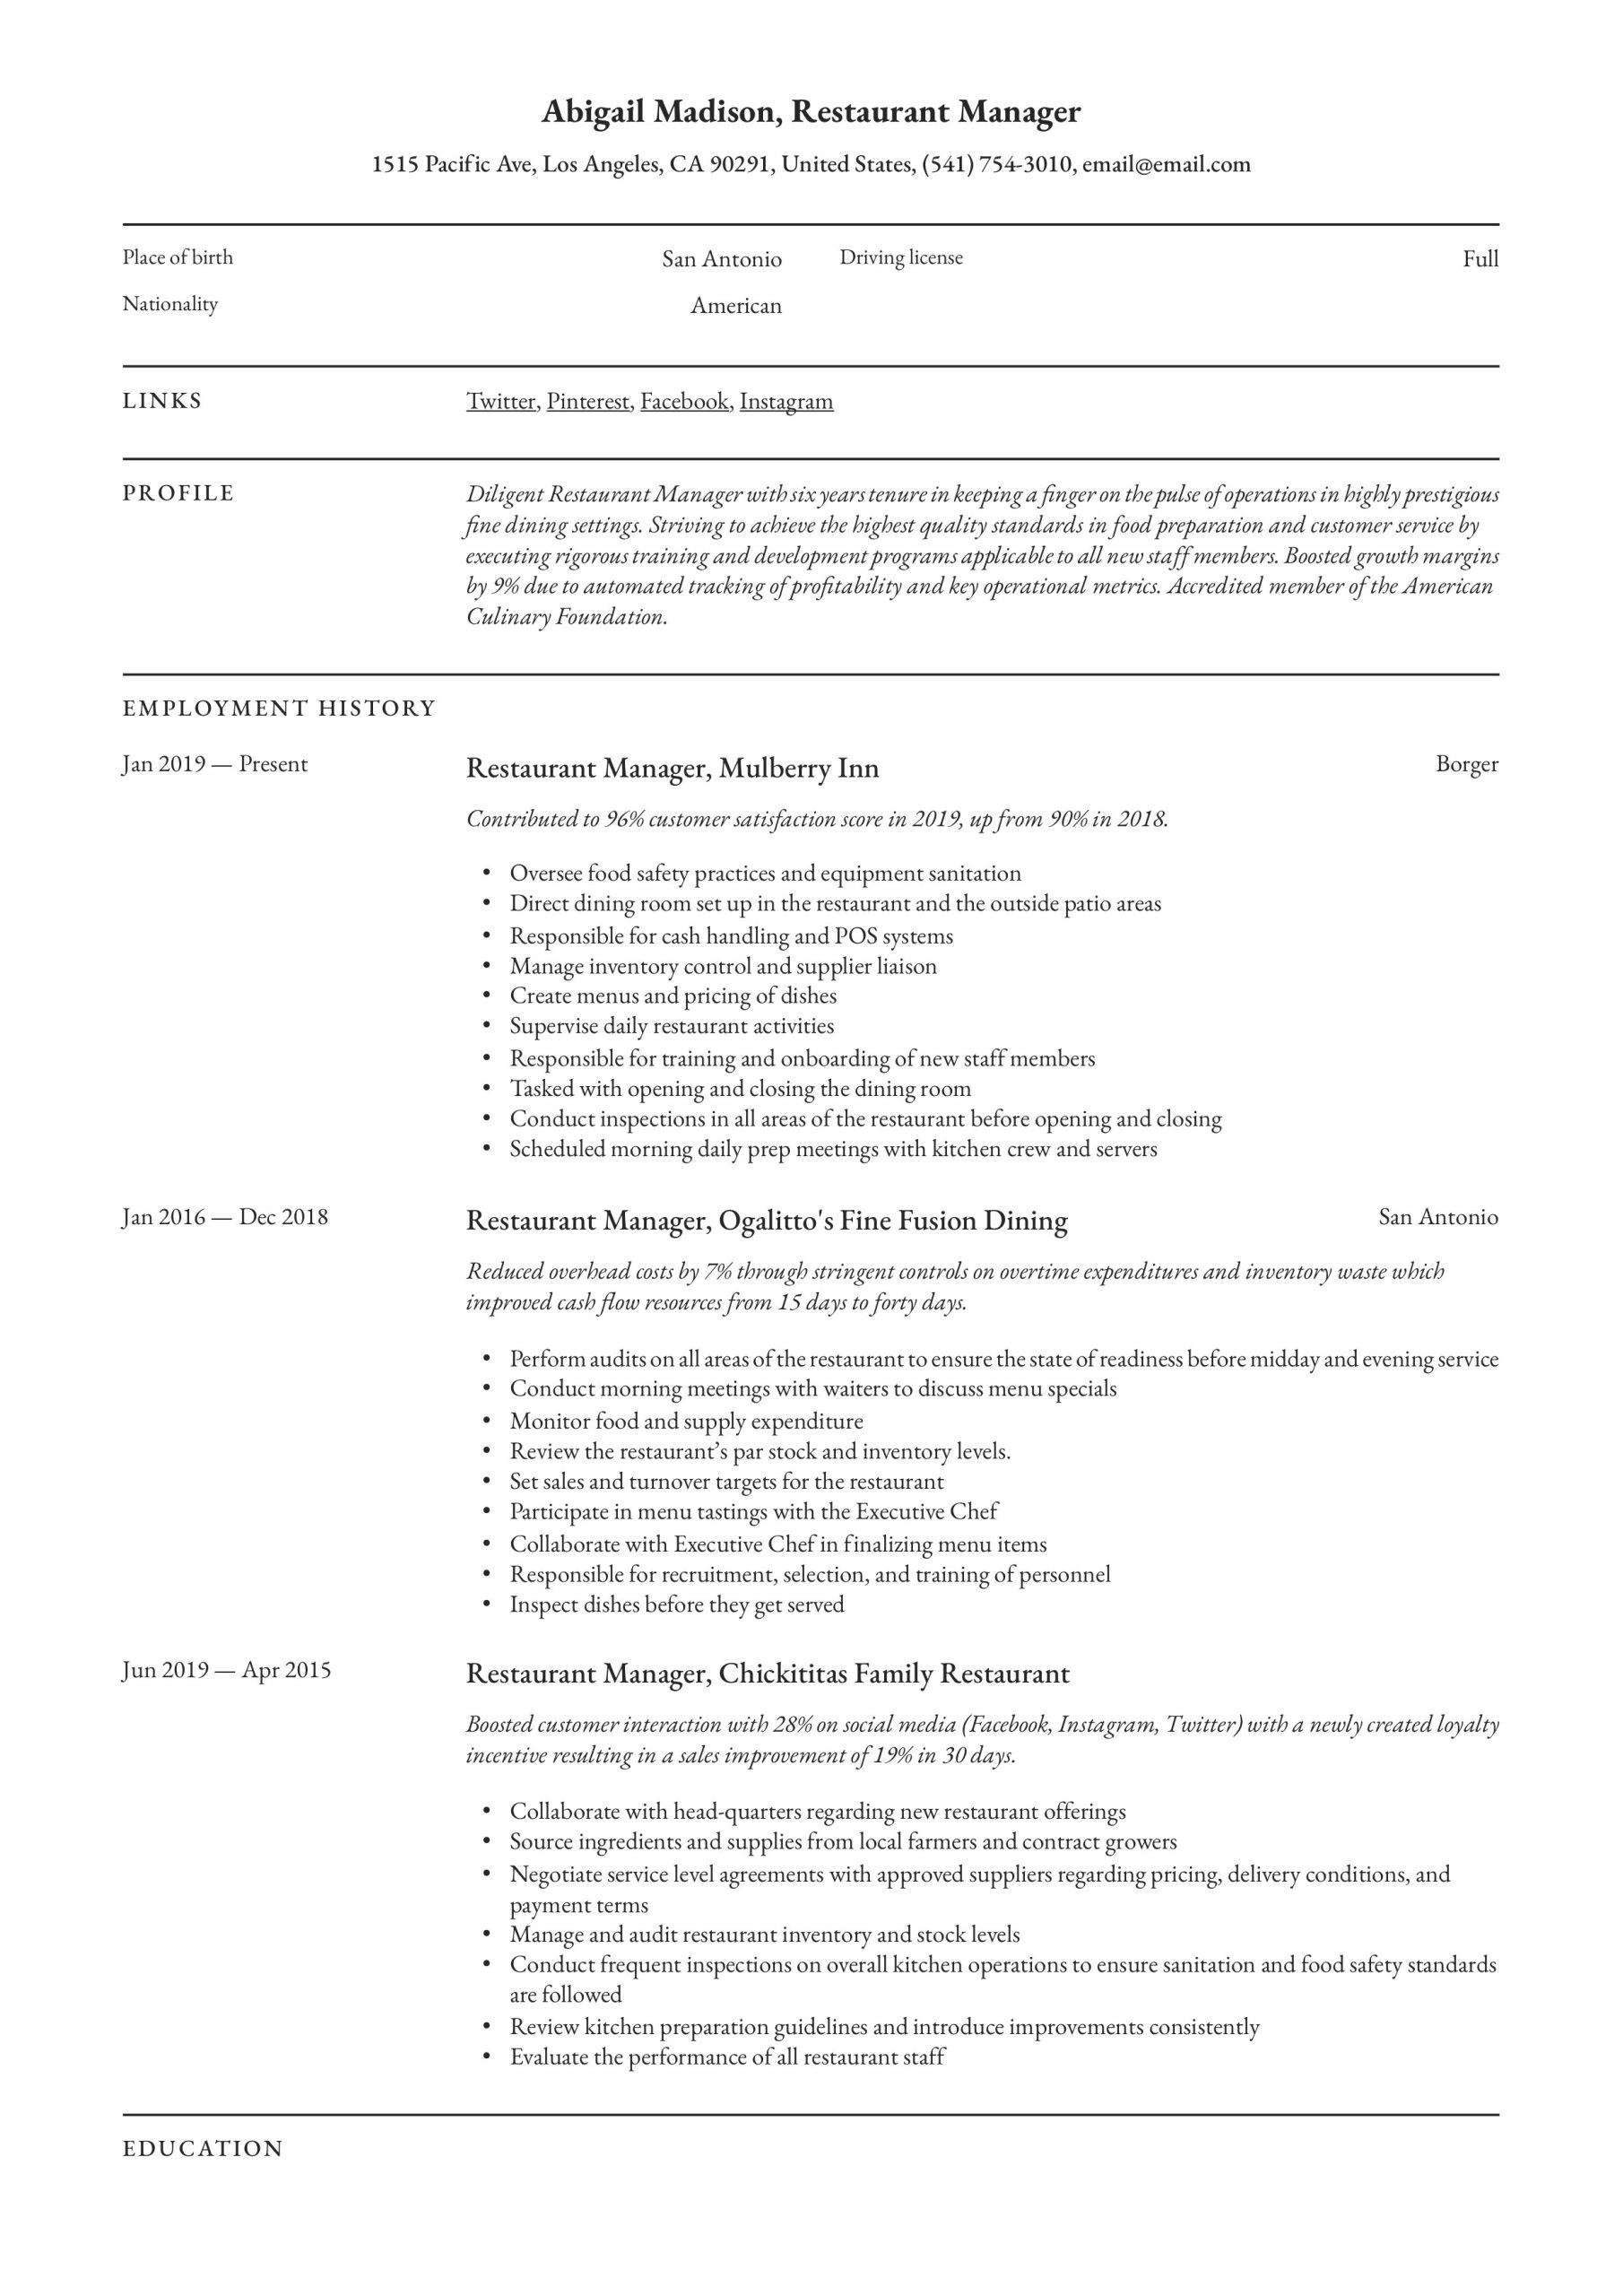 Resume format Sample for Restaurant Jobs Restaurant Manager Resume & Writing Guide  12 Examples 2020